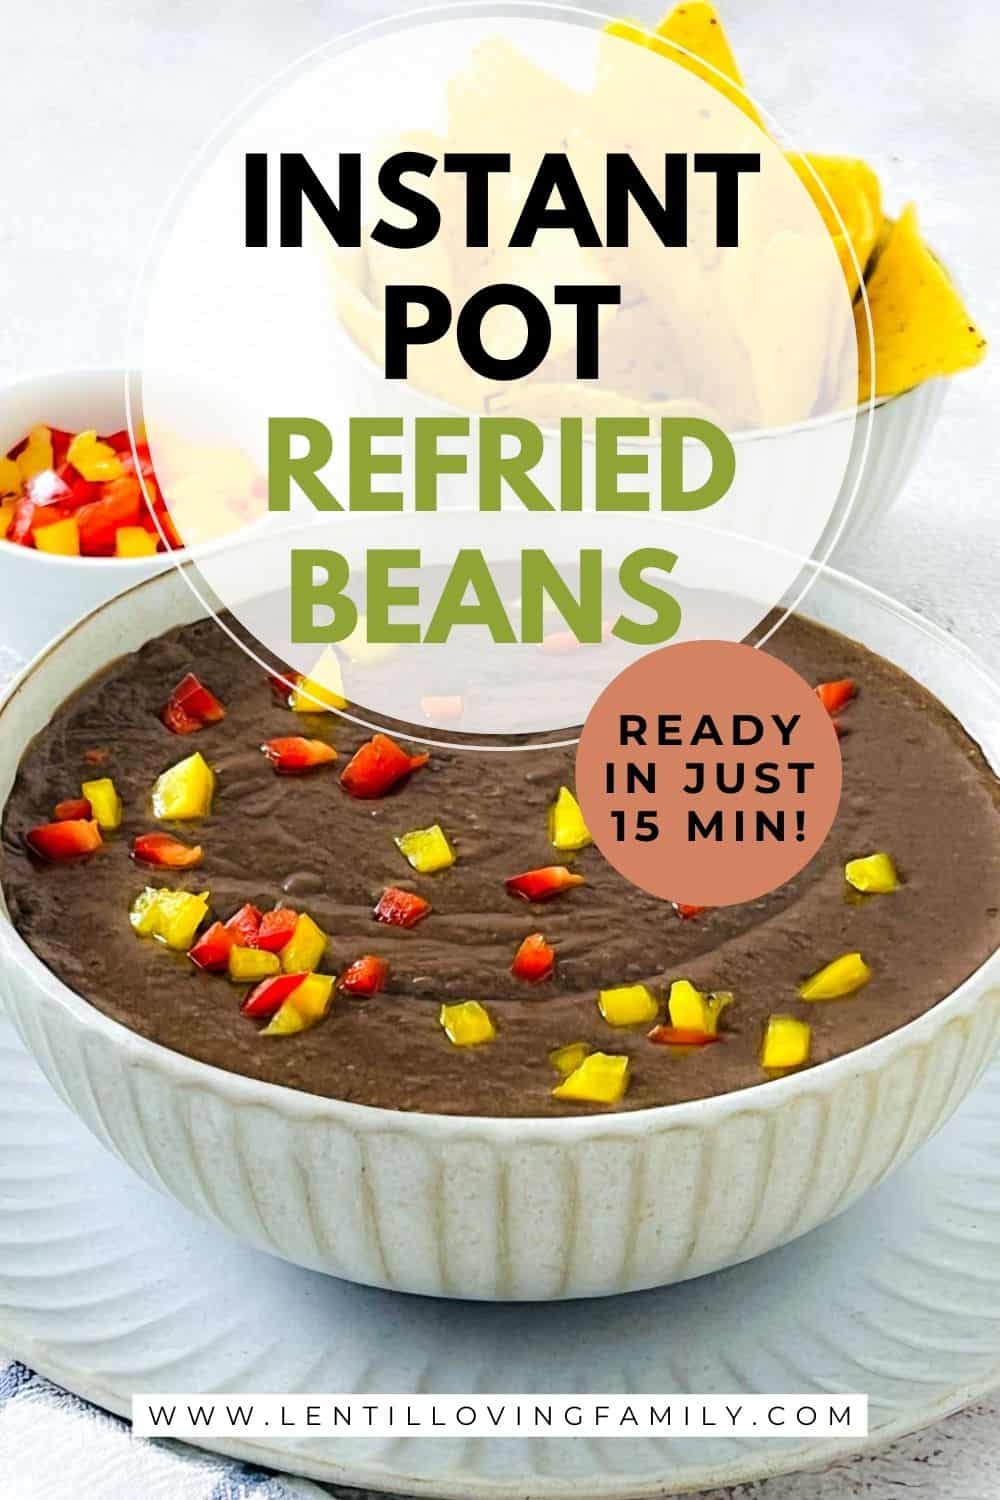 Refried beans Pinterest image.